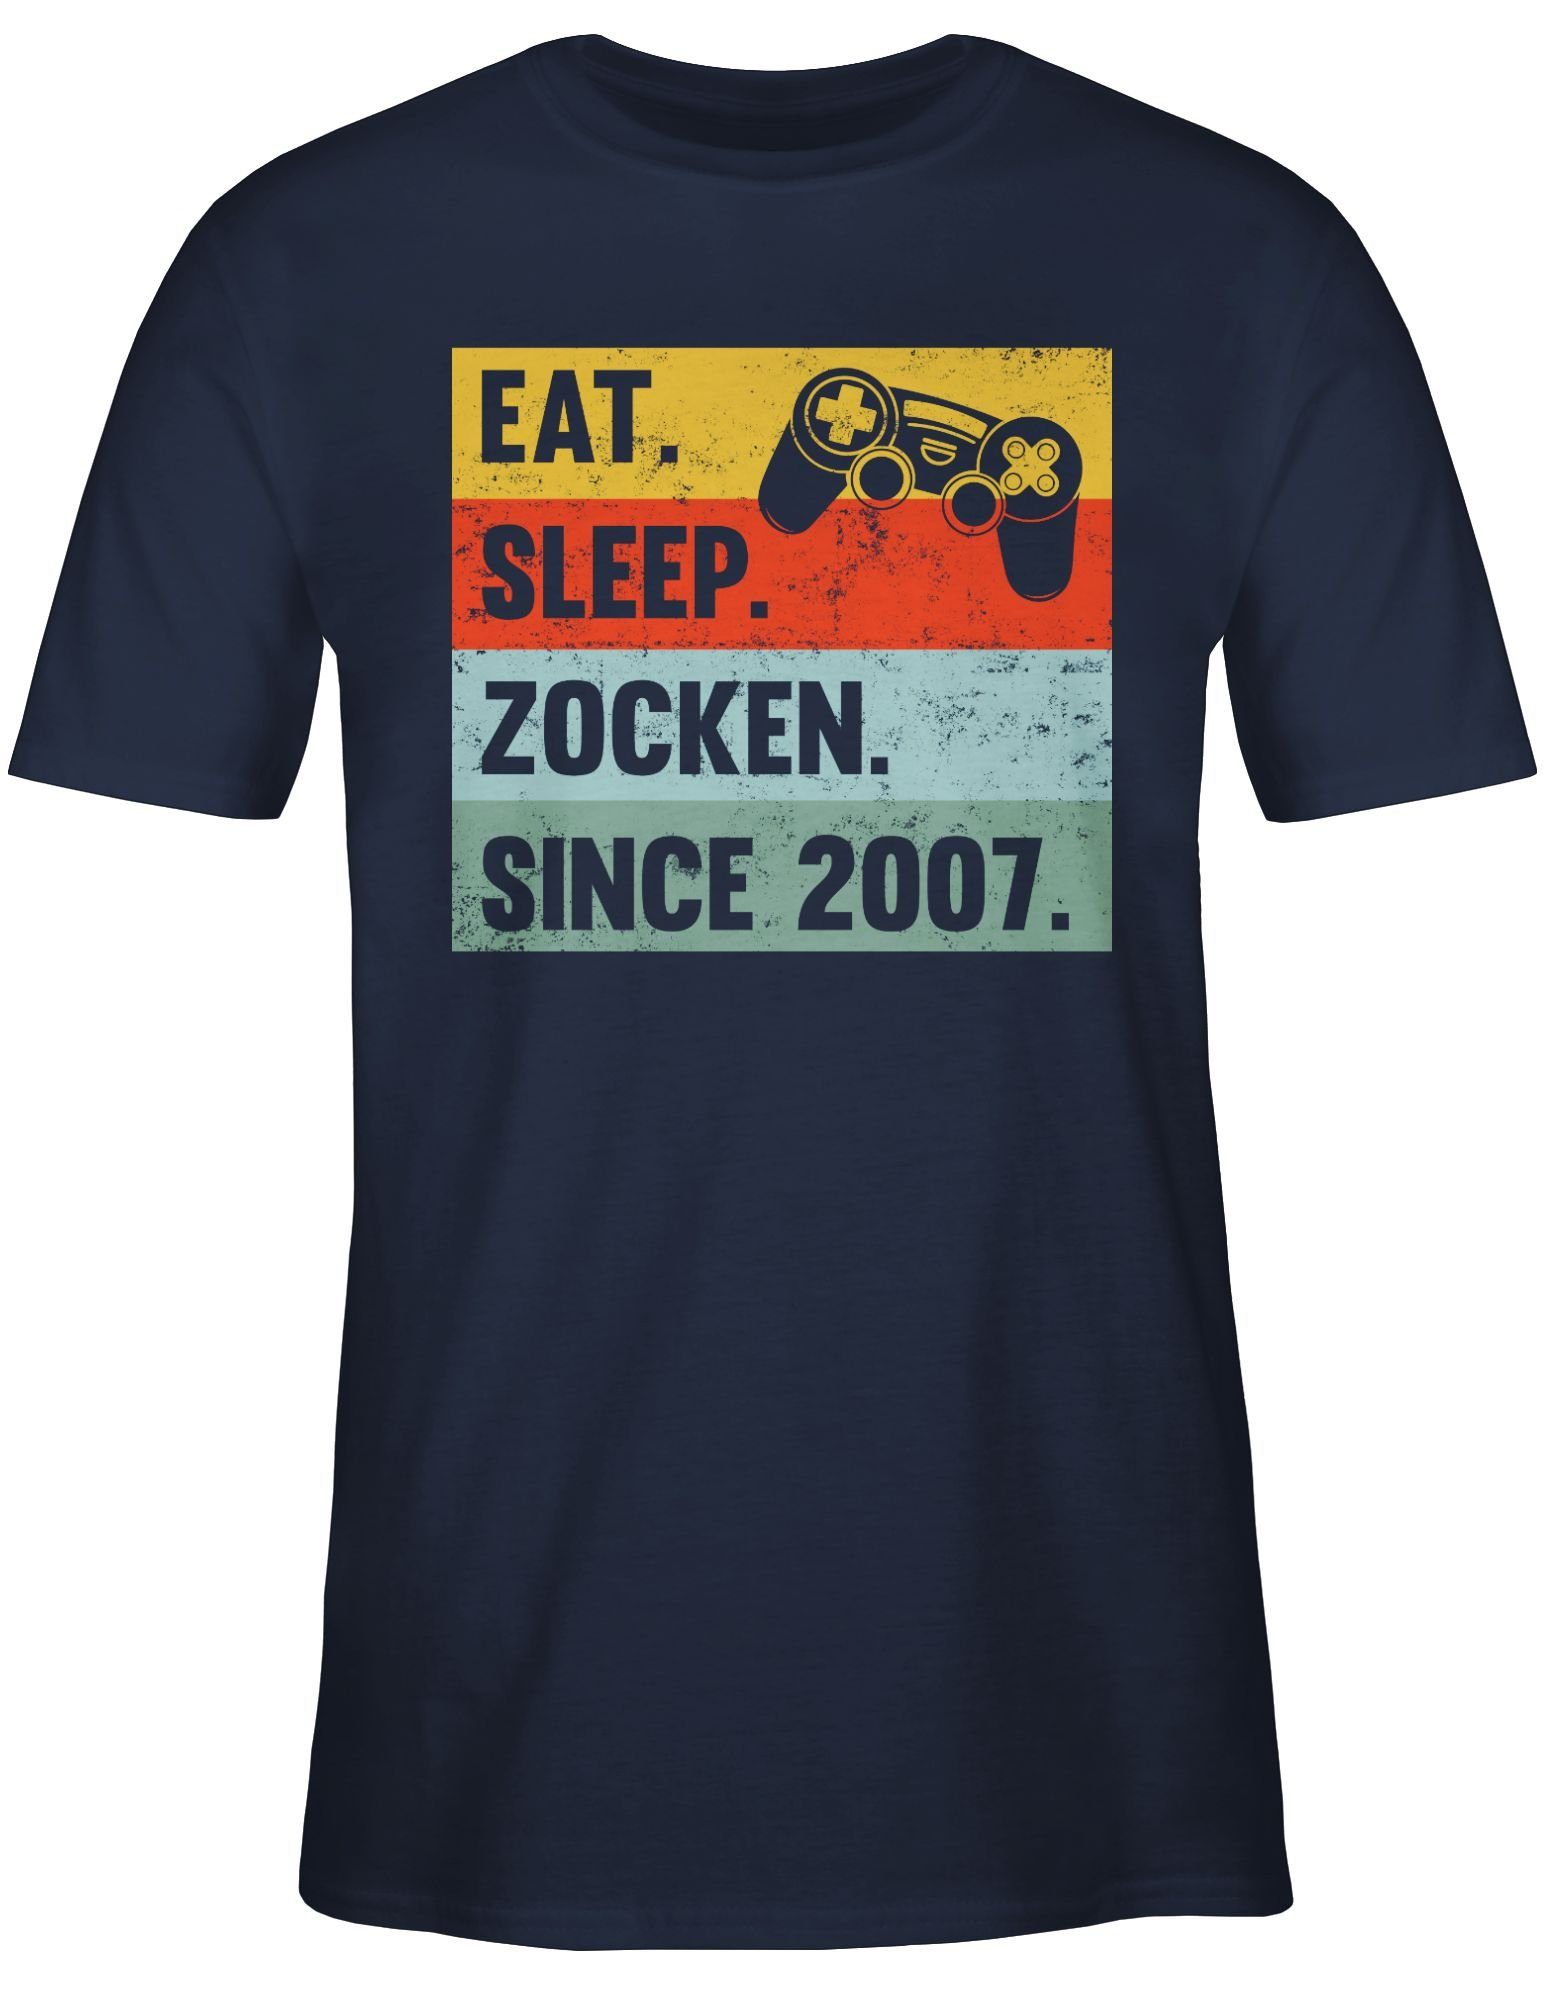 Navy Zocken 2007 16. 03 Sleep Eat T-Shirt Blau Shirtracer Since Geburtstag